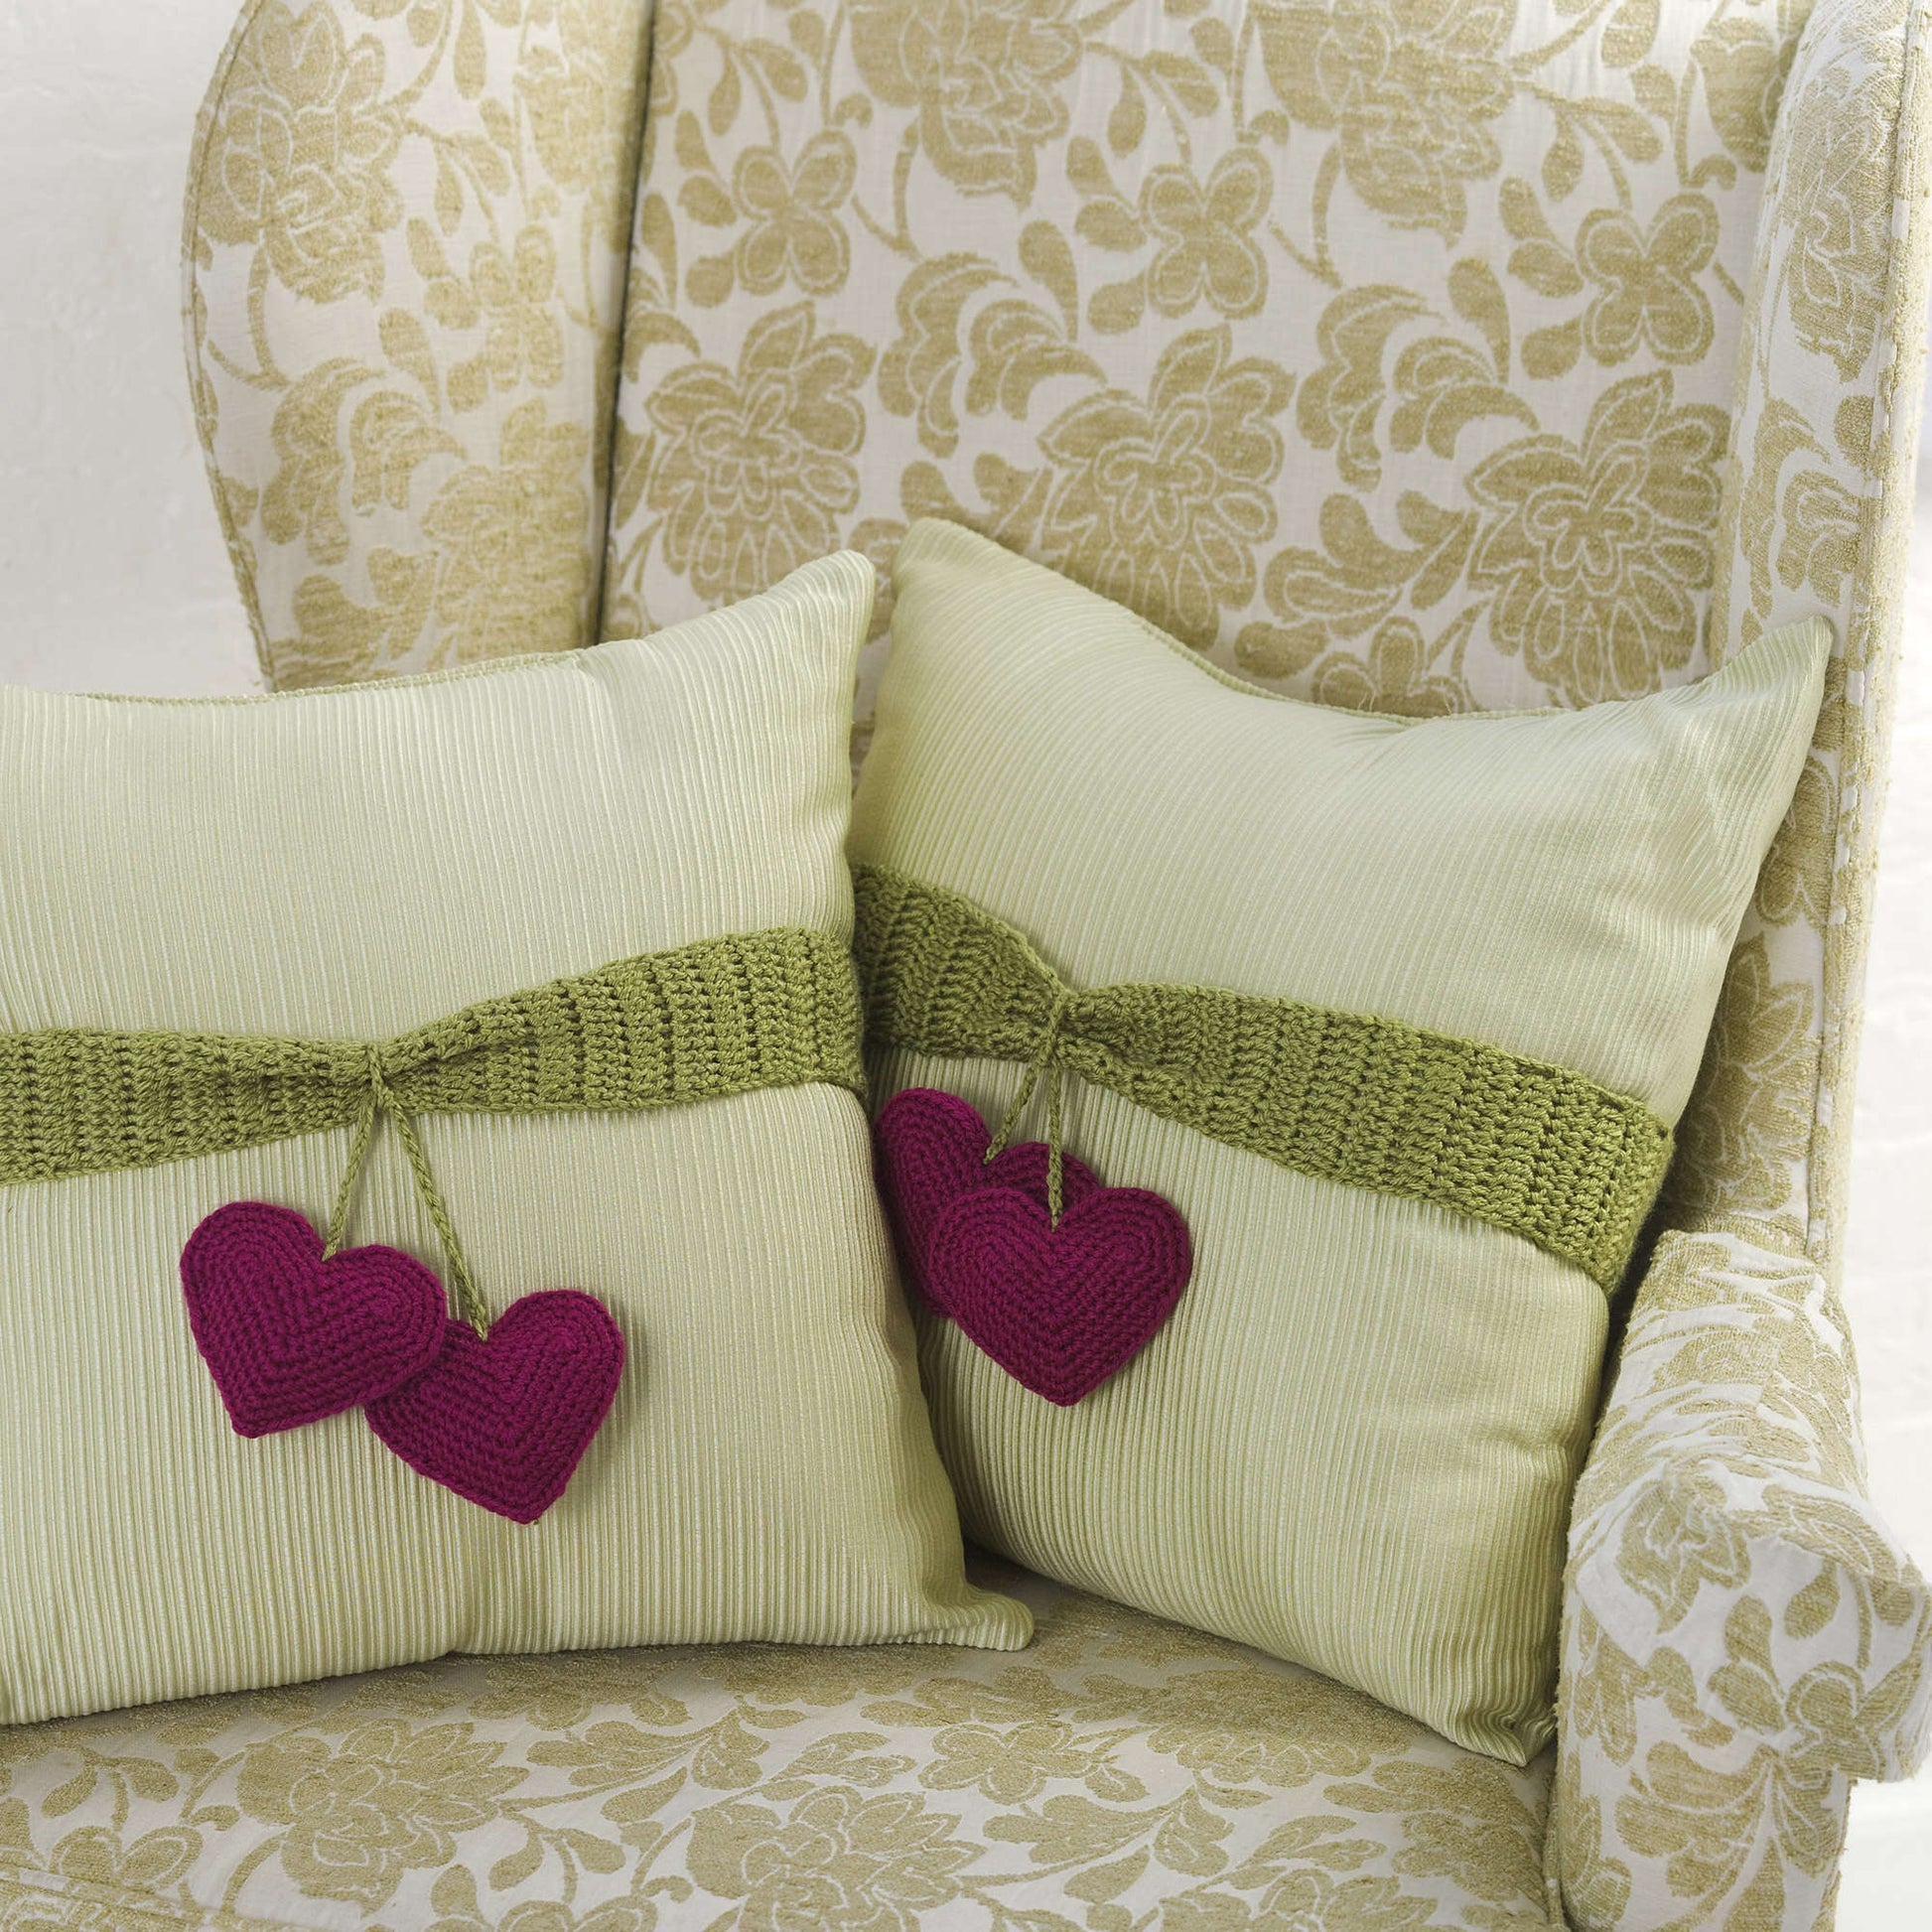 Free Red Heart Heart-to-Heart Pillow Trim Crochet Pattern